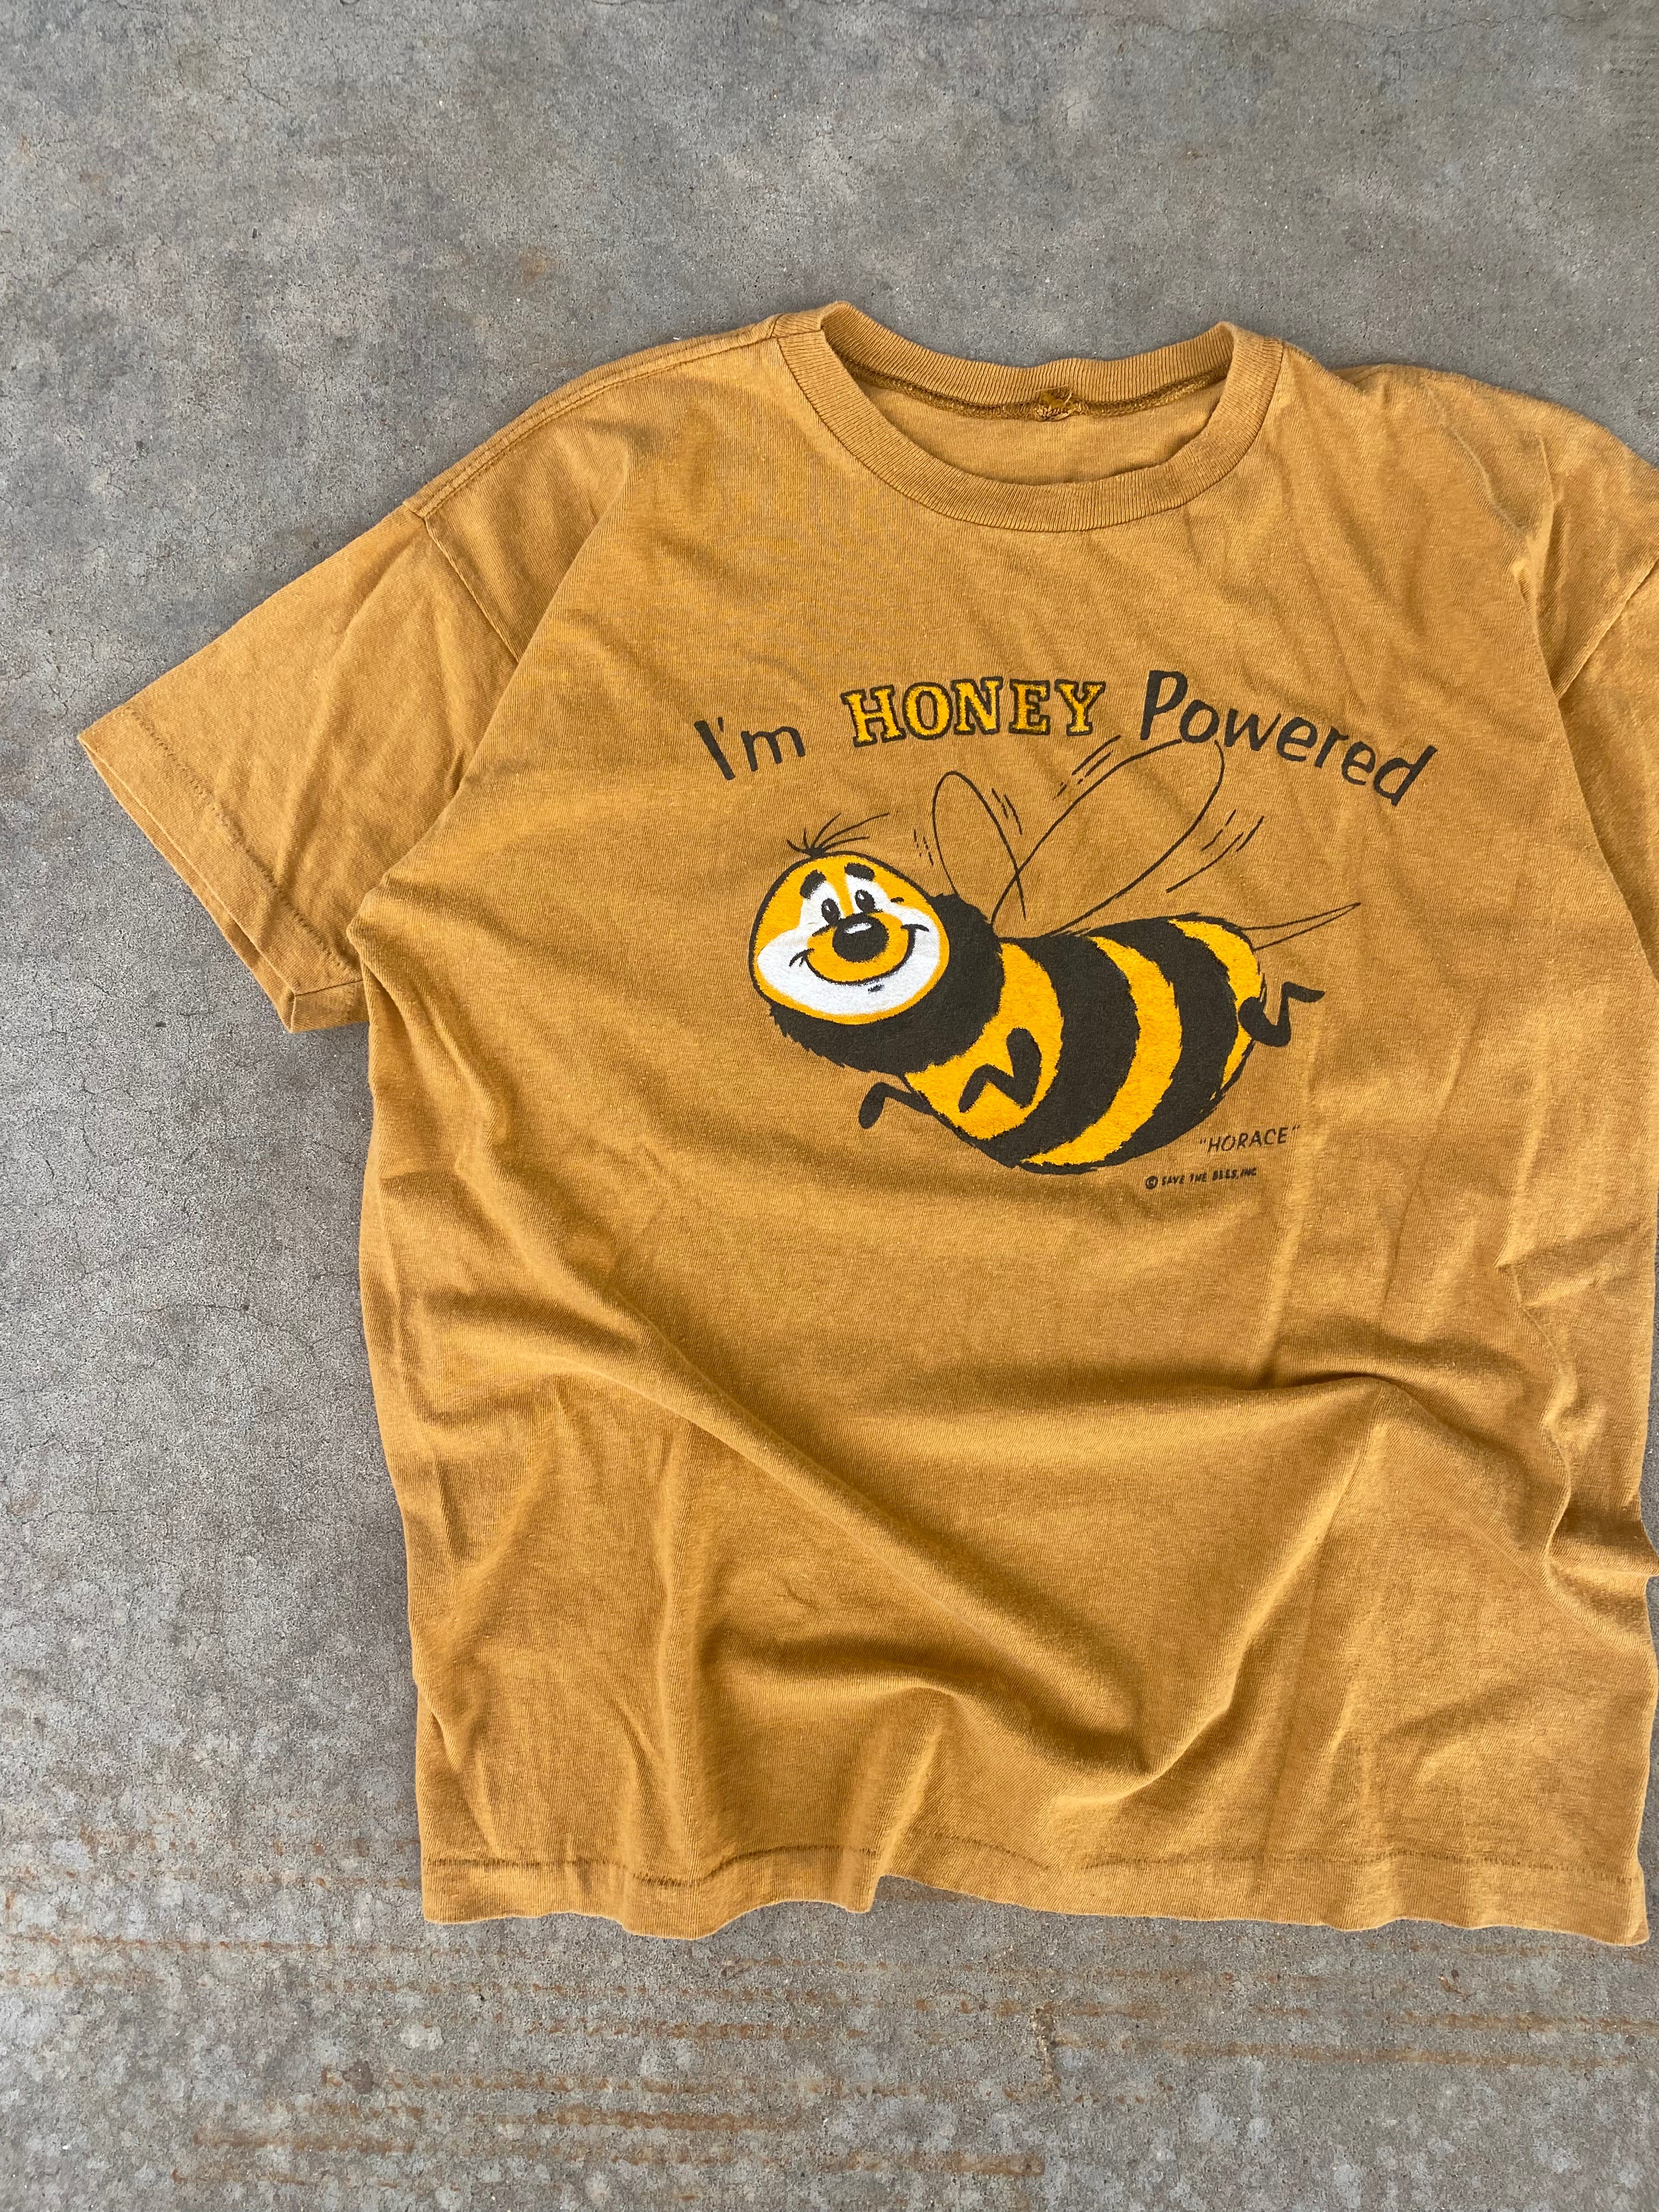 1980s I’m Honey Powered T-Shirt (M/L)